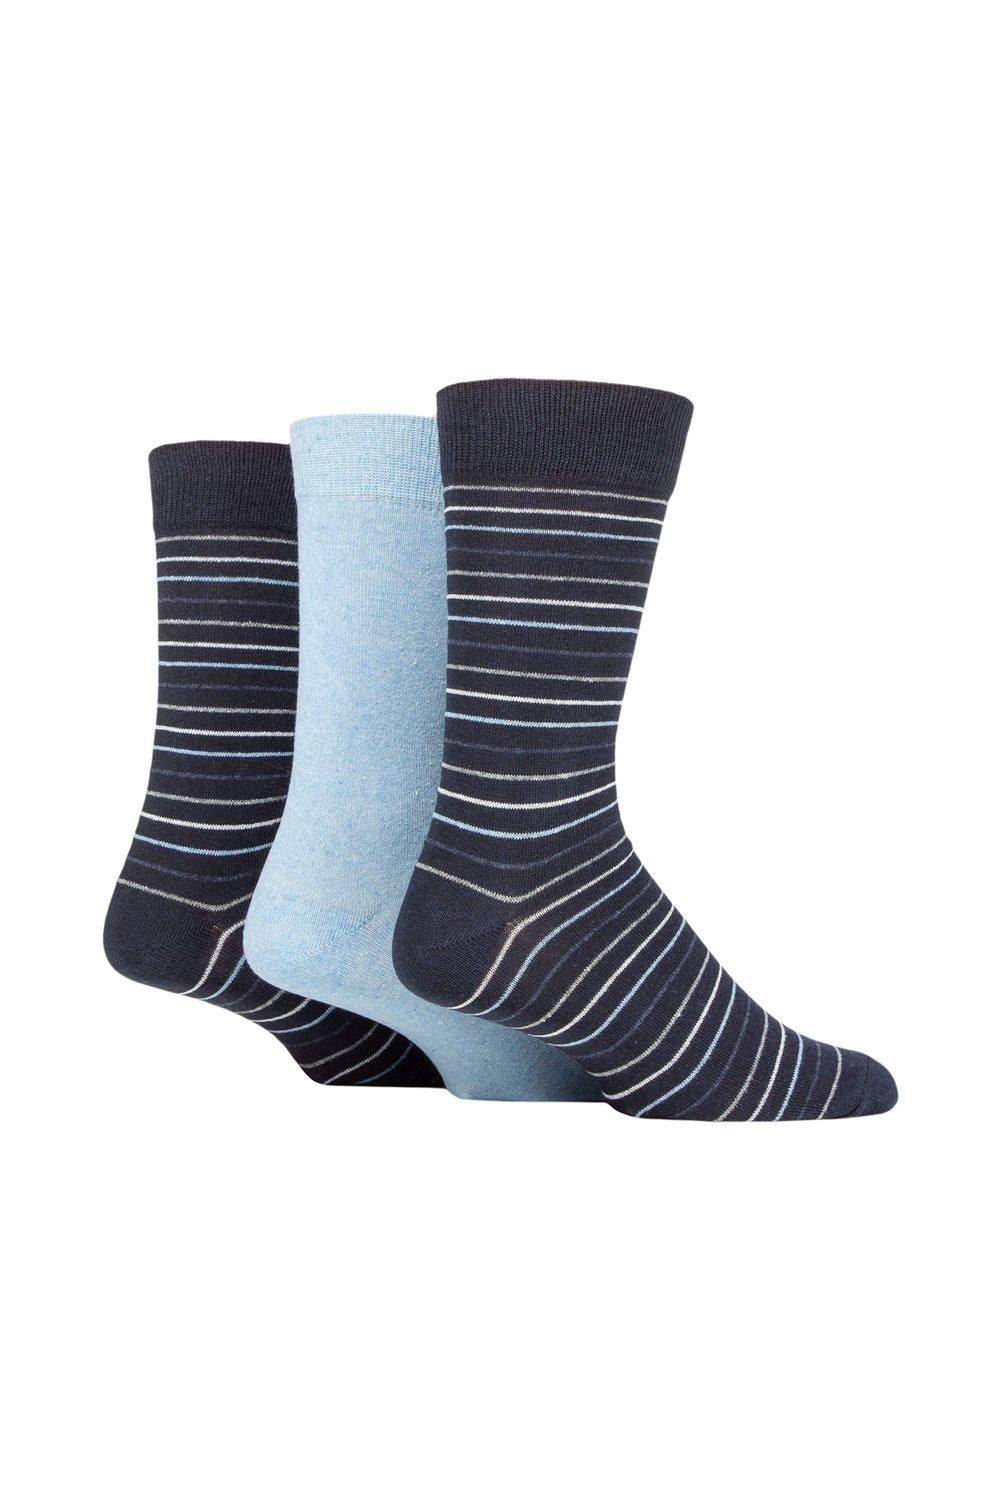 3 Pair 100% Recycled Multi Stripe Cotton Socks